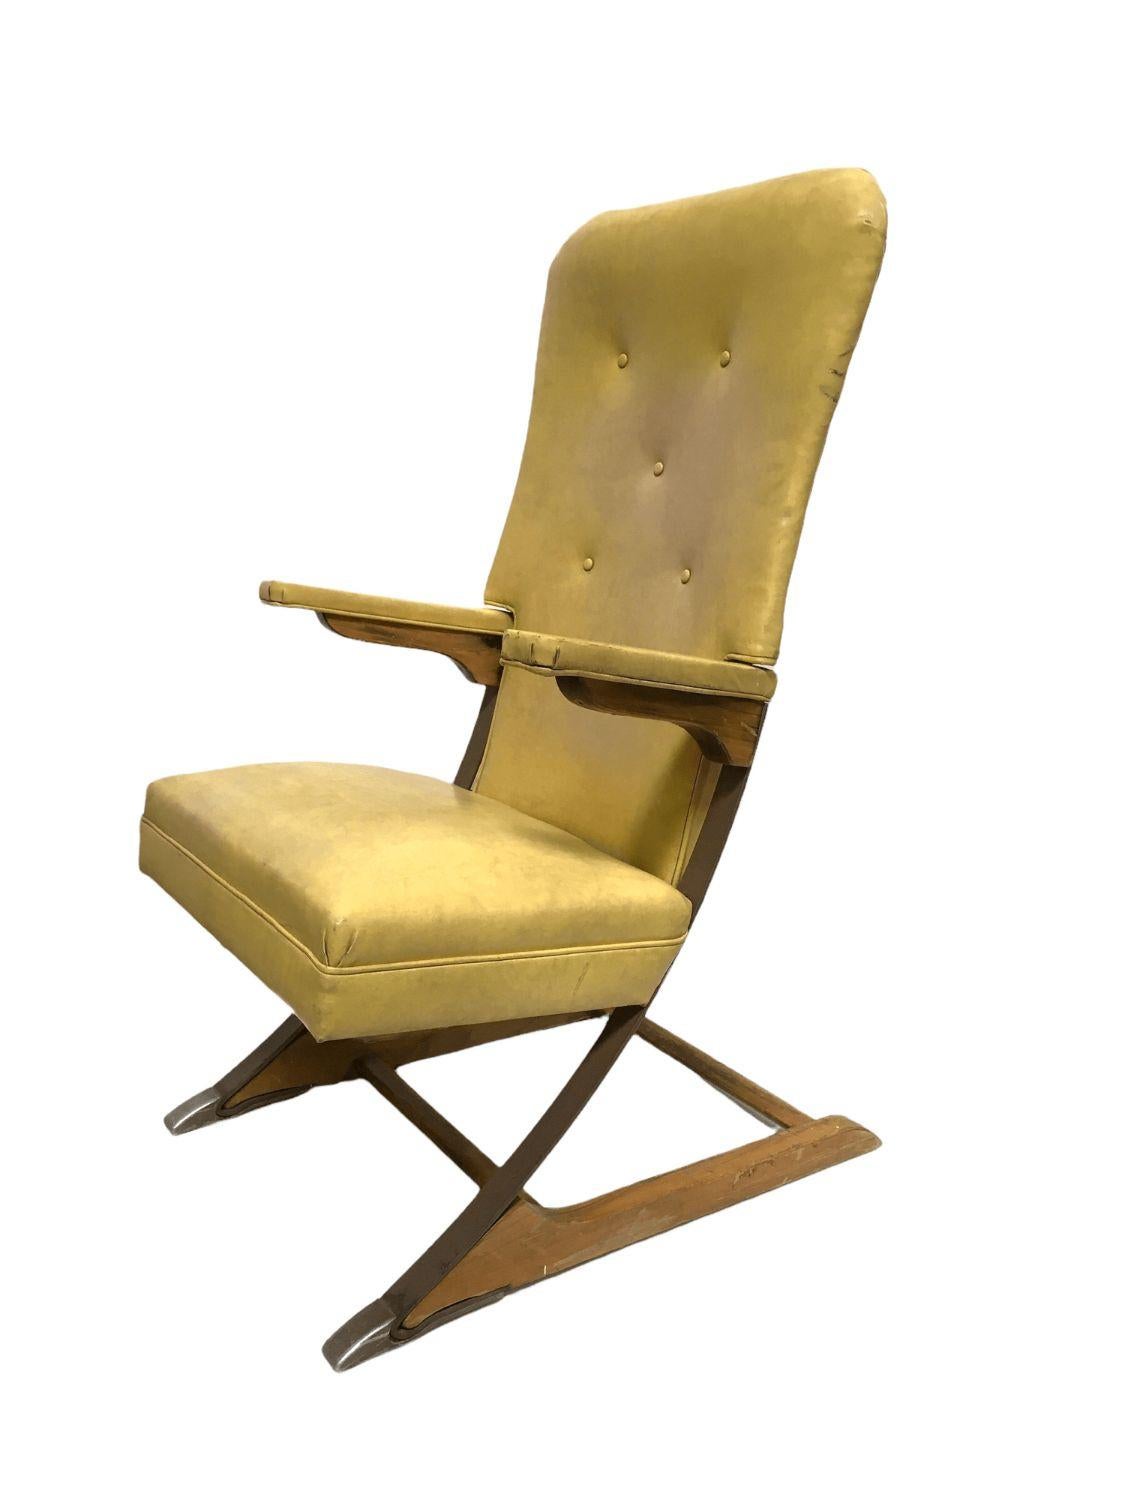 Mid-Century Modern Vieille chaise Rock-a-Chair Cantilever Rocker Chair en vinyle doré de moisson en vente